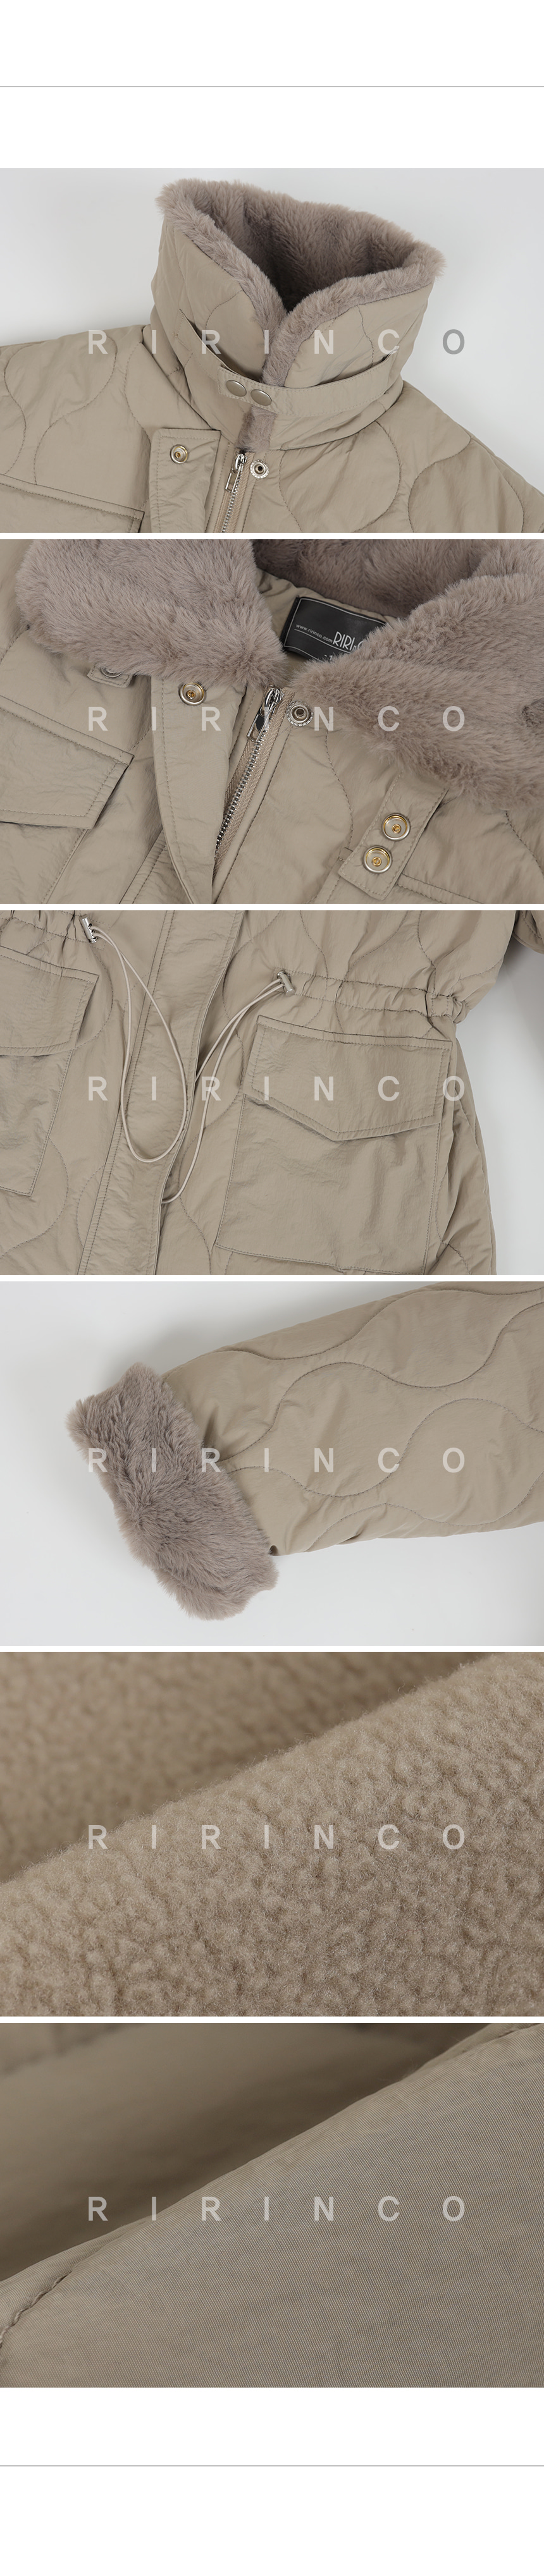 RIRINCO ファーカラーキルティングダウンジャケット